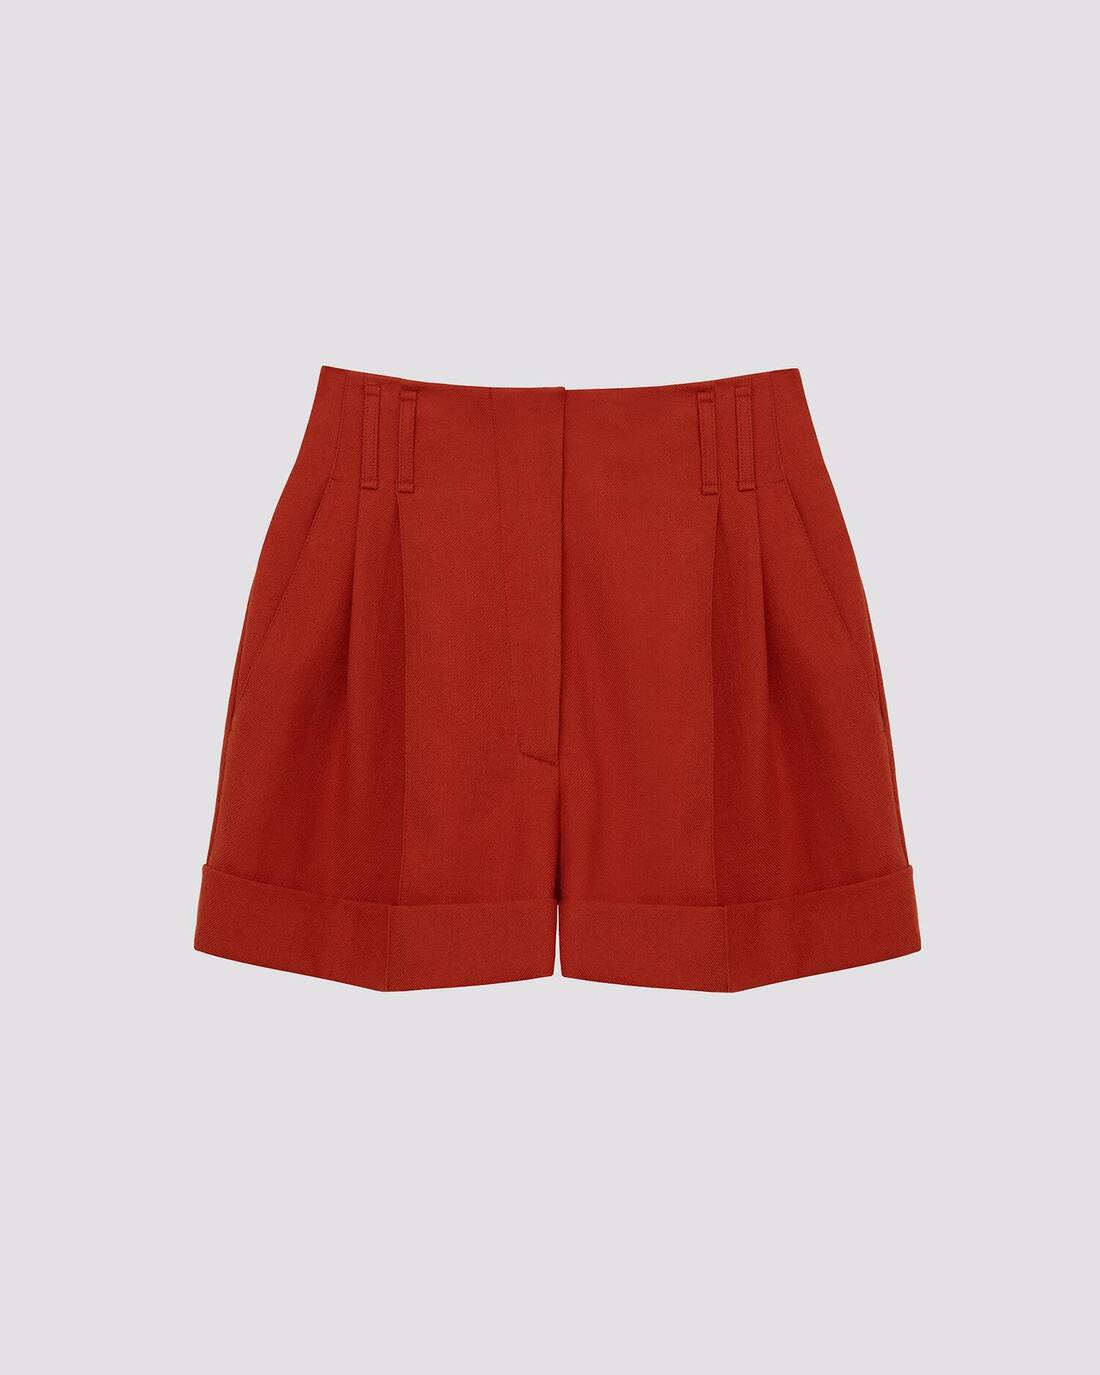  Wool fabric shorts